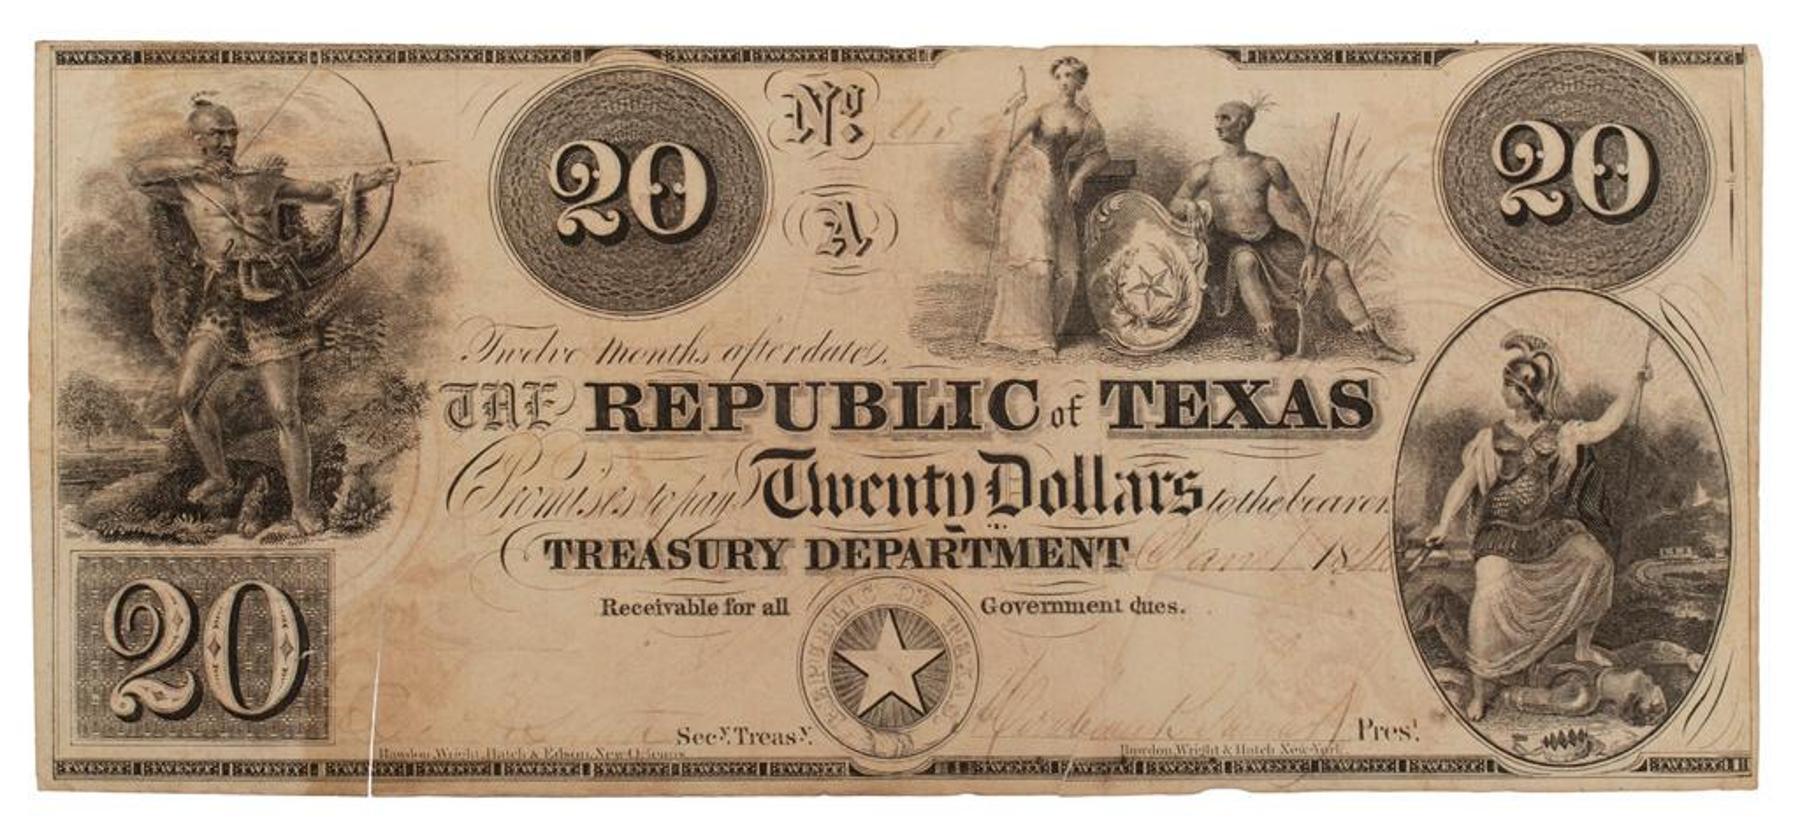 Historical Texas Paper - $20 Republic of Texas Treasury Note